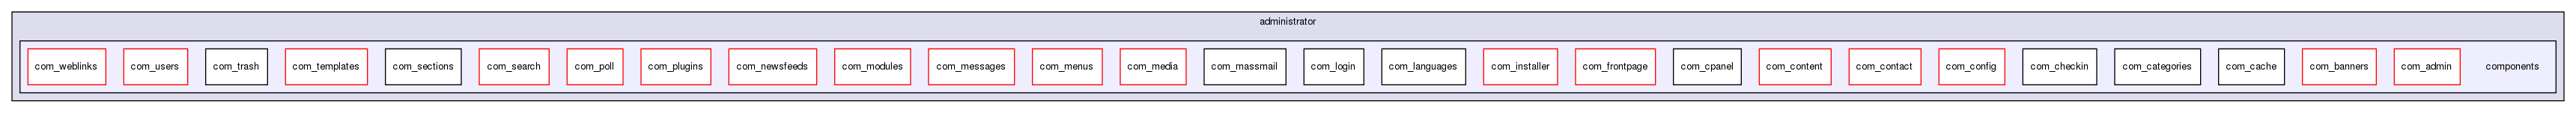 joomla-1.5.26/administrator/components/